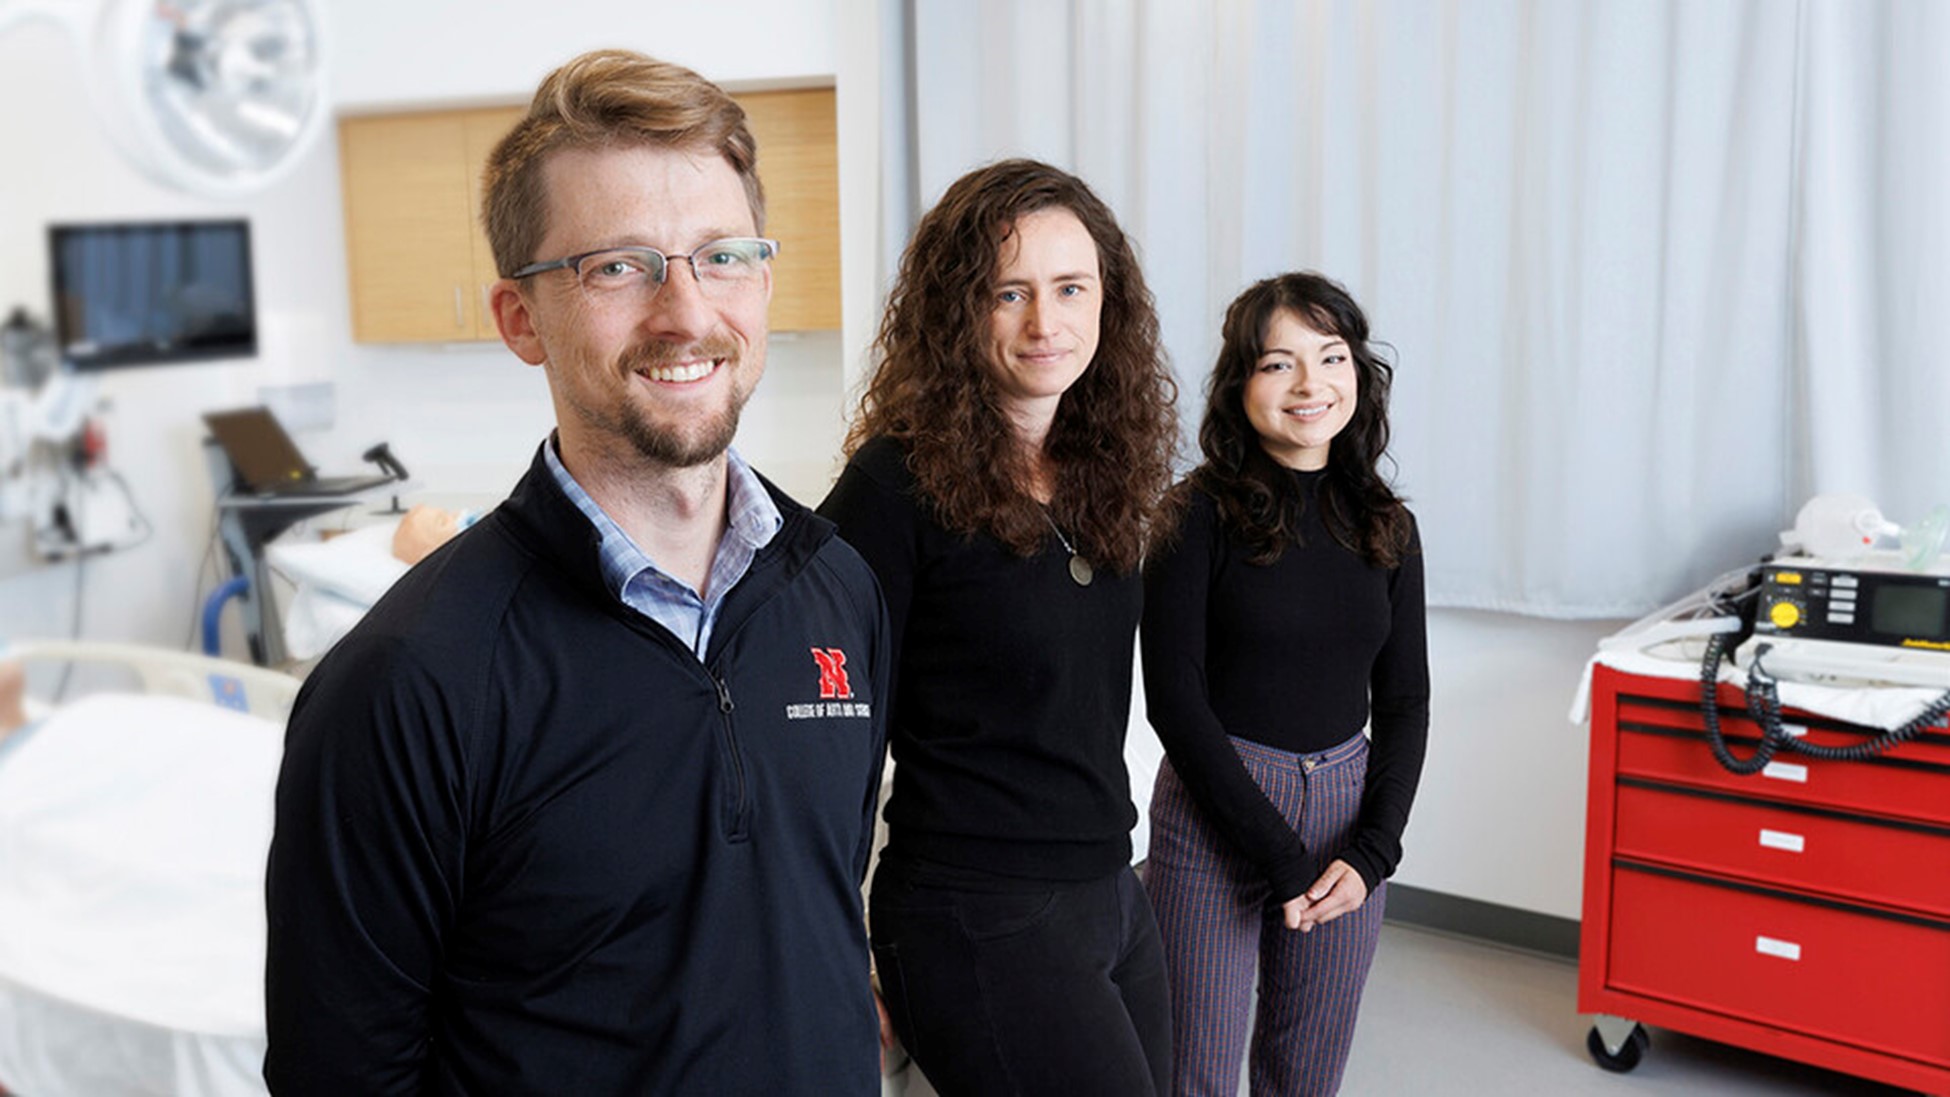 Husker researchers Arthur “Trey” Andrews, Tierney Lorenz and Sara Reyes